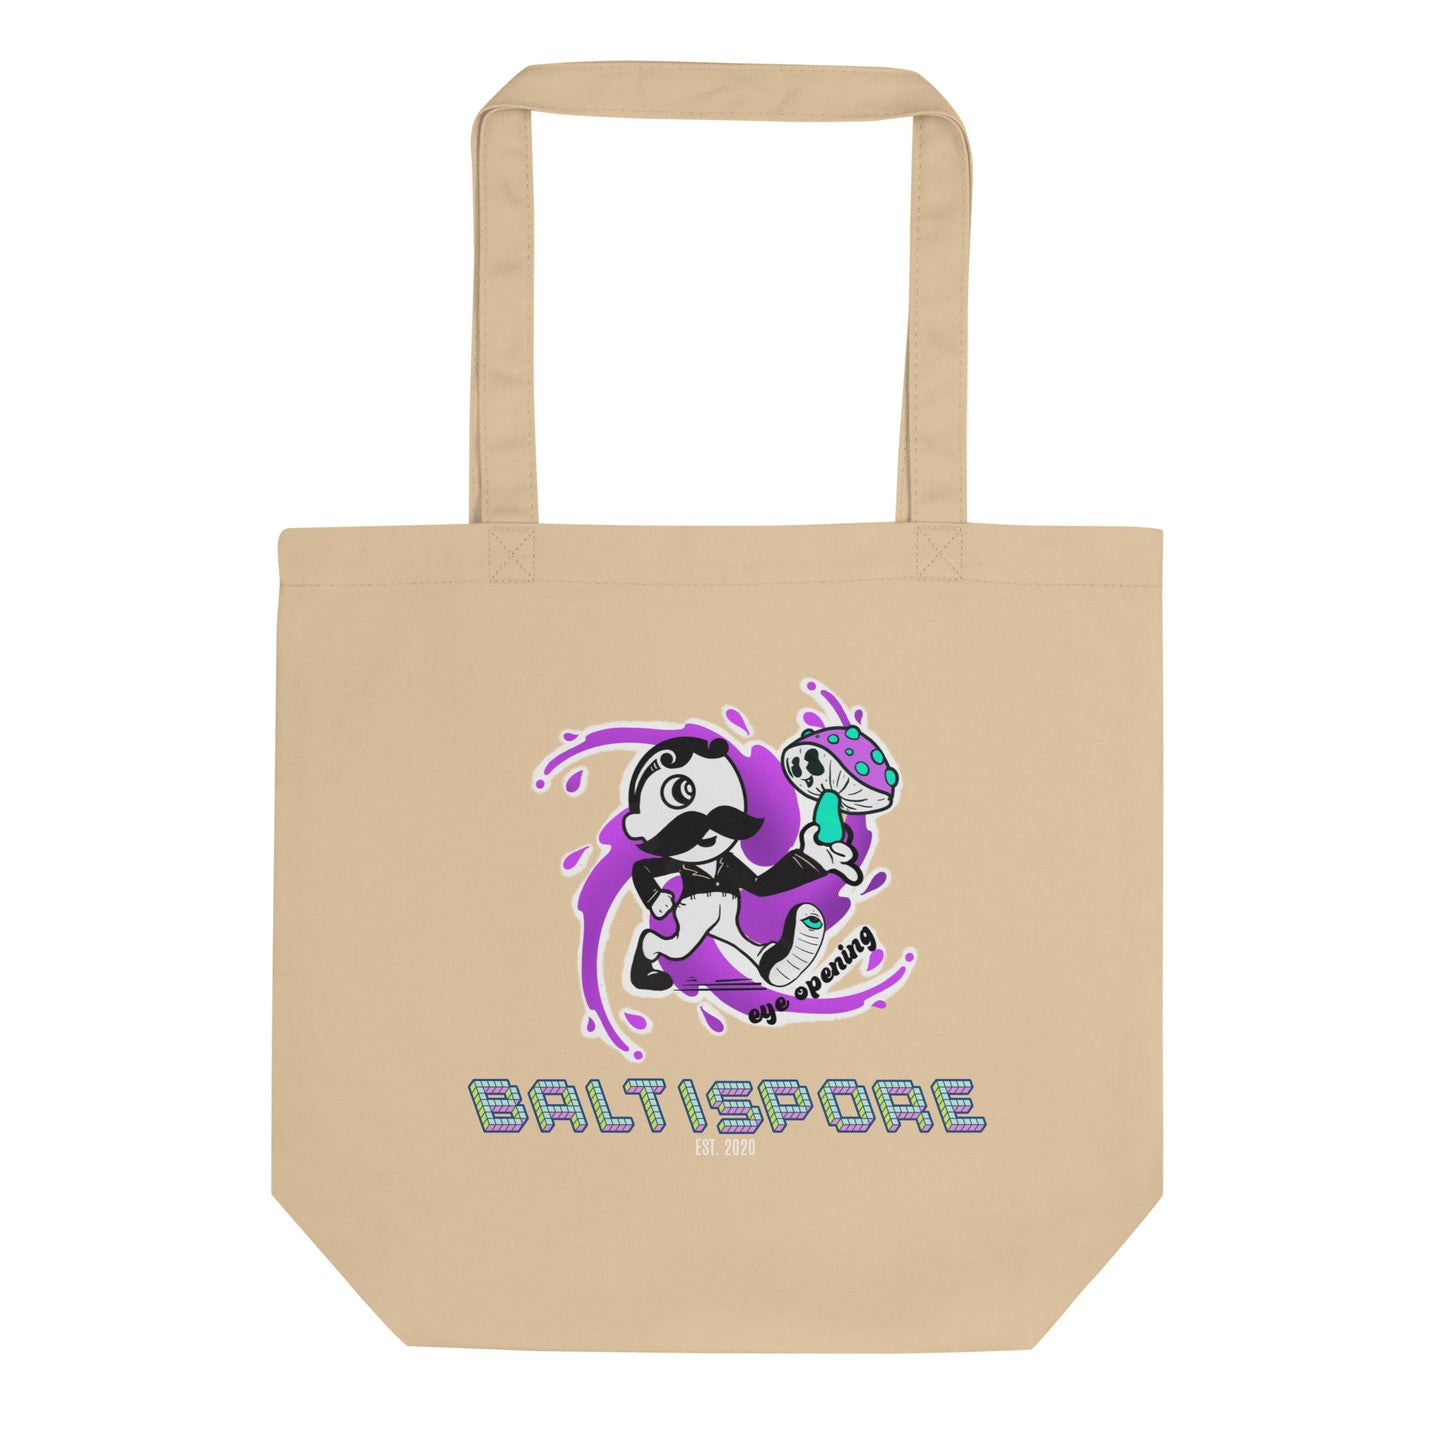 BOHtiSpore Eco Tote Bag•••